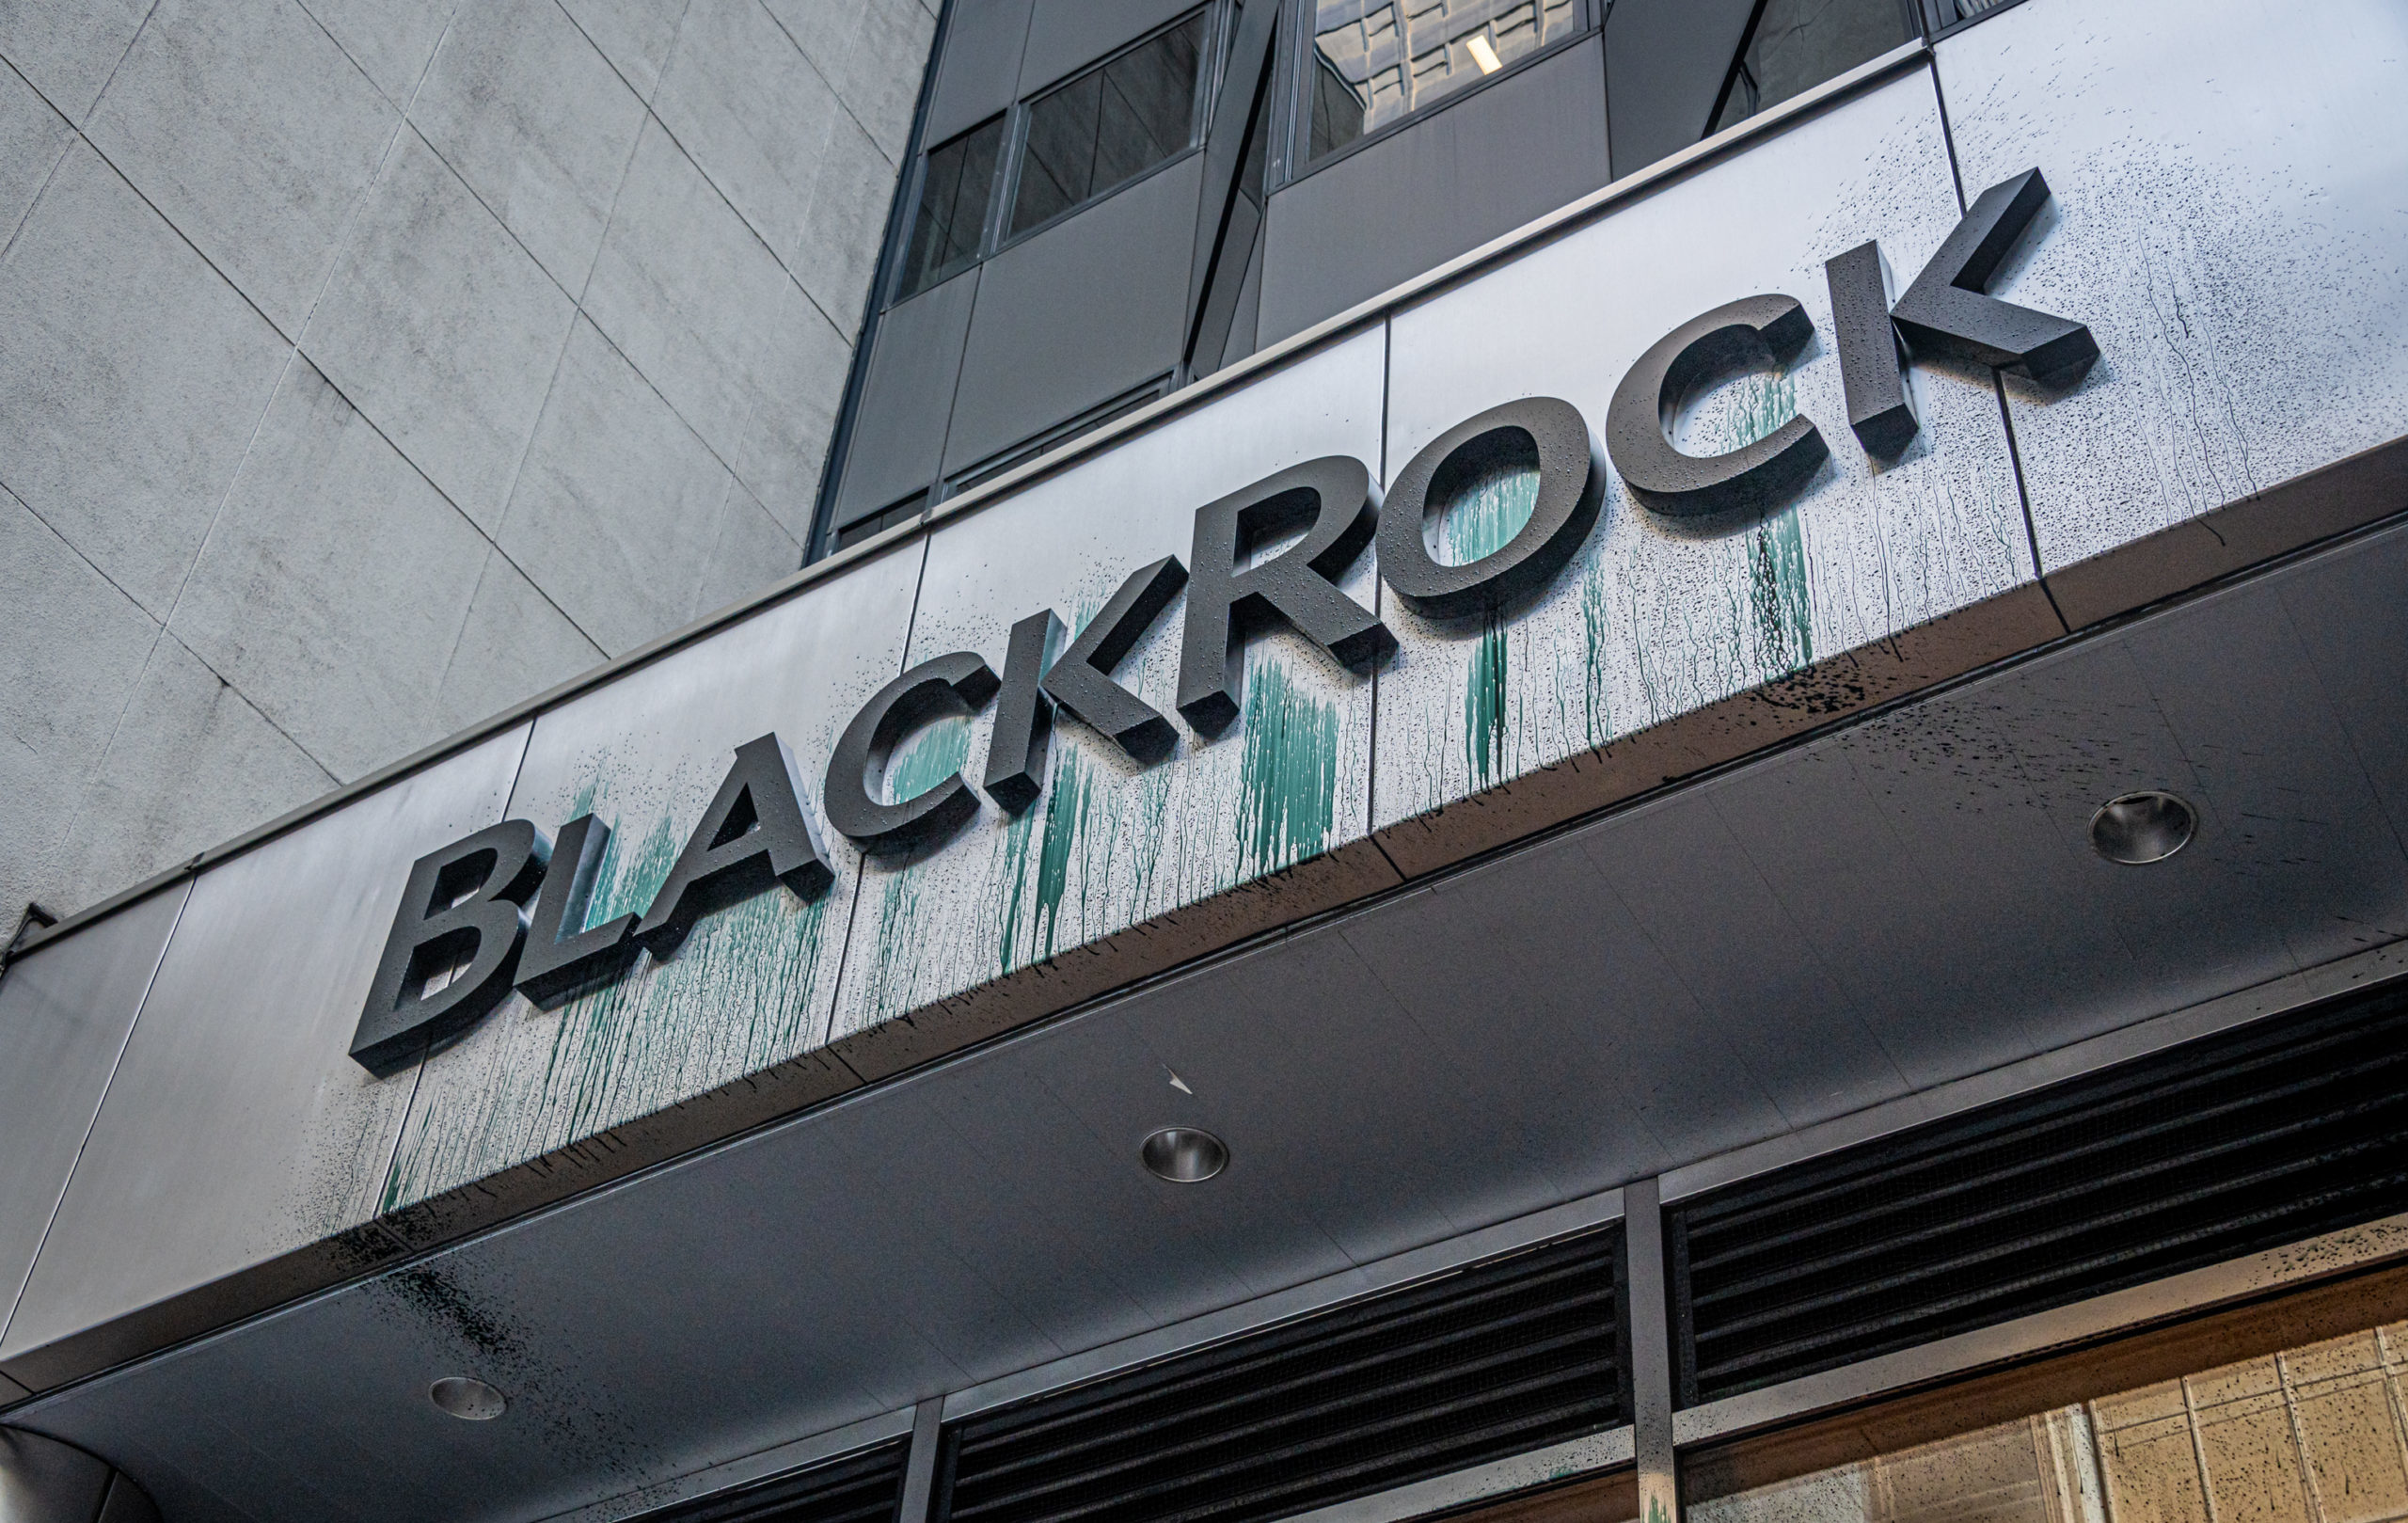 BlackRock logo seen sprayed with a "coal sludge" like